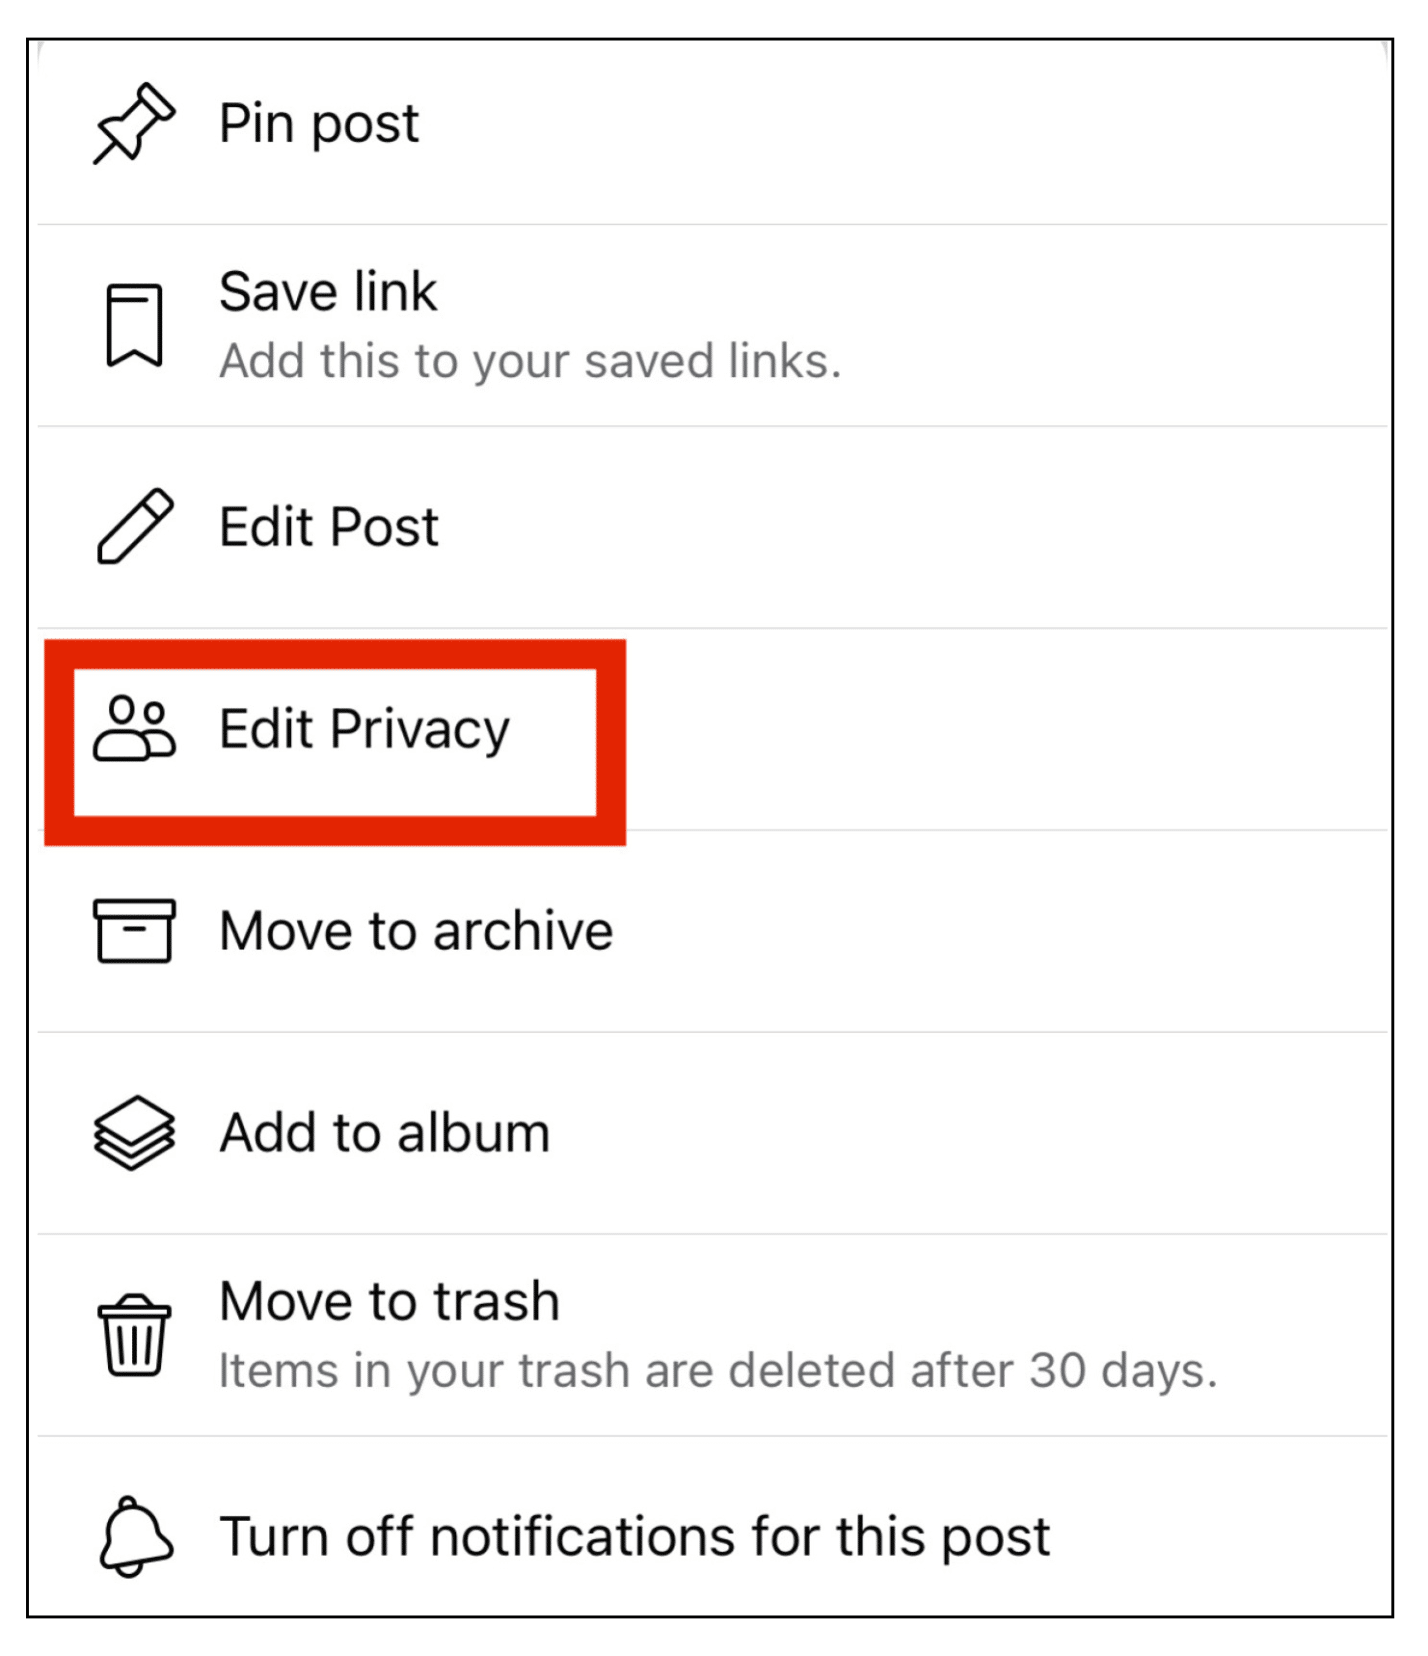 Edit Privacy